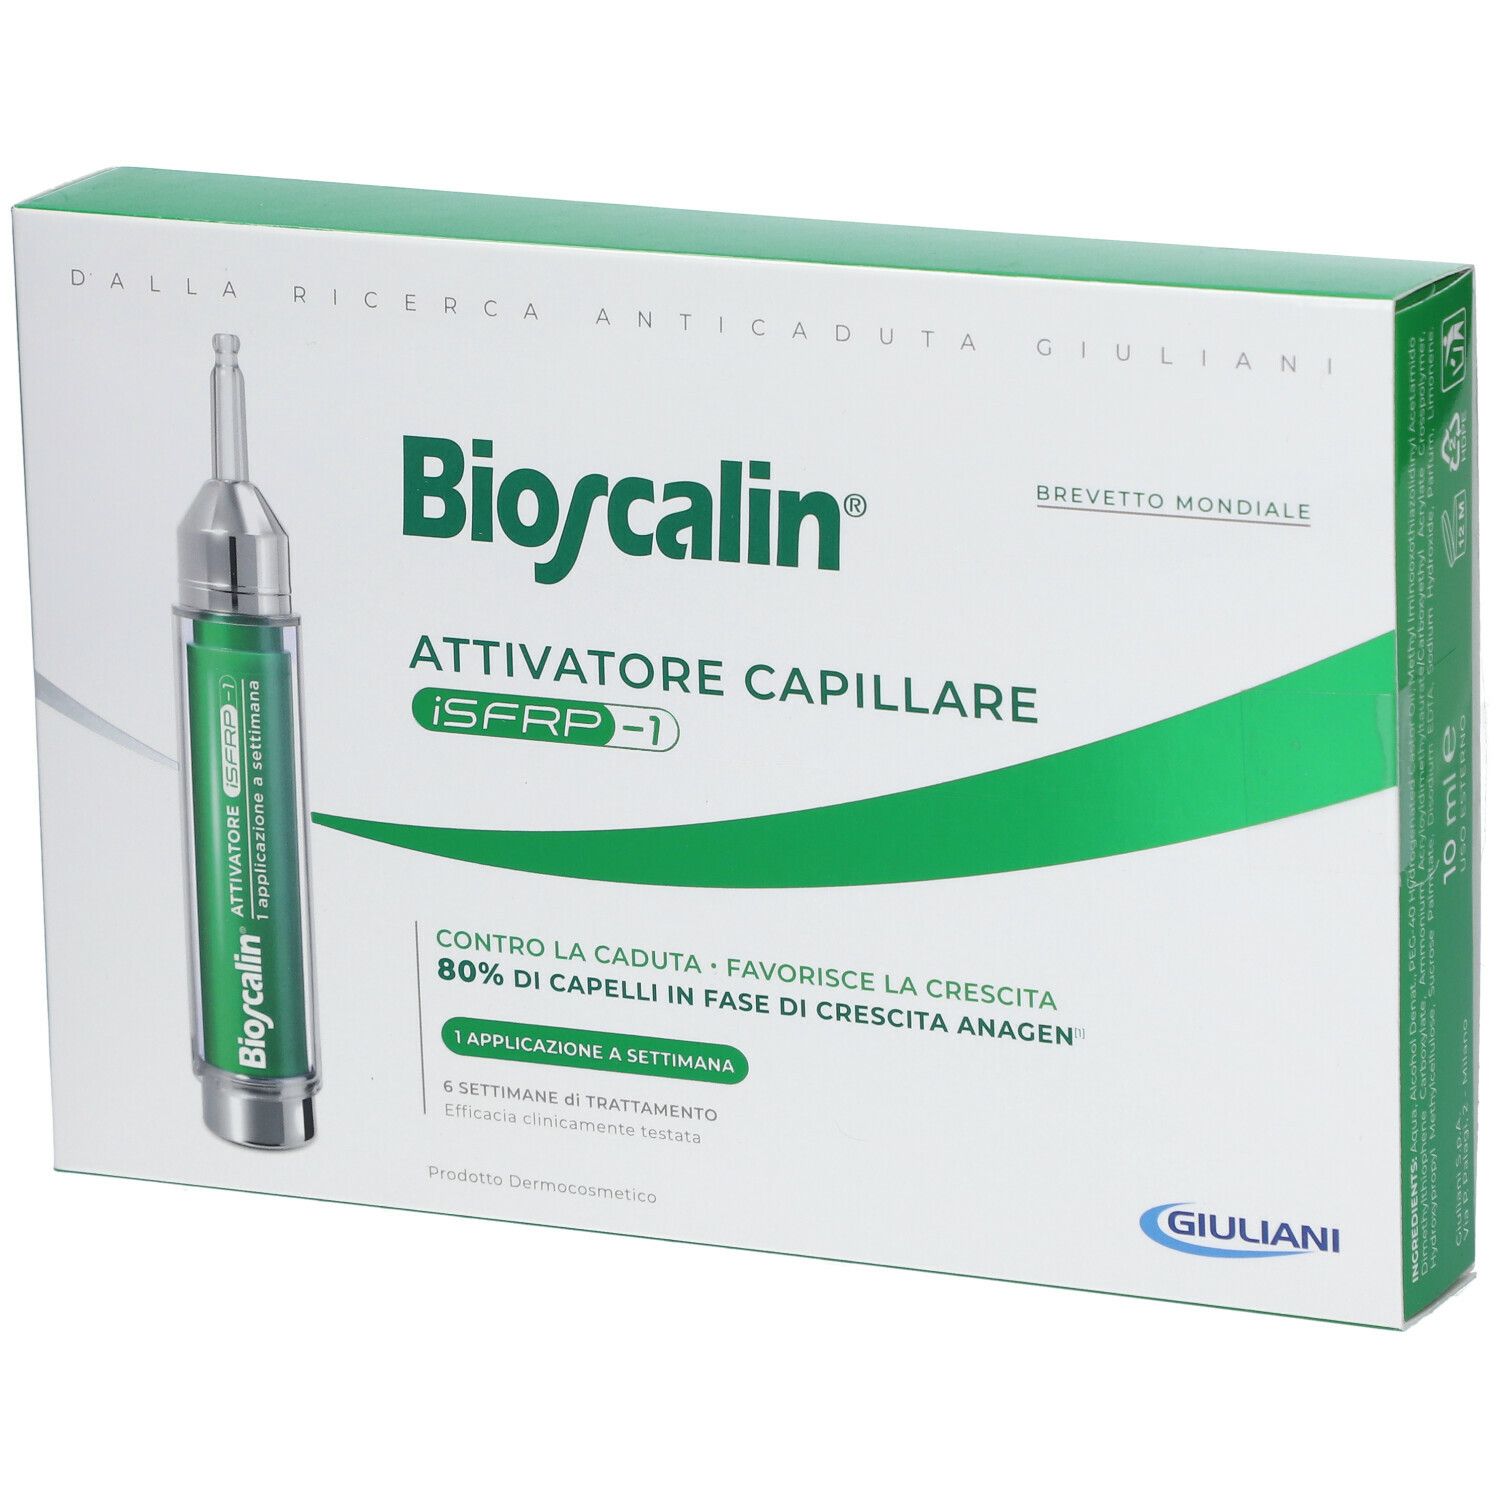 Image of Bioscalin® Kapillaraktivator iSFRP-1